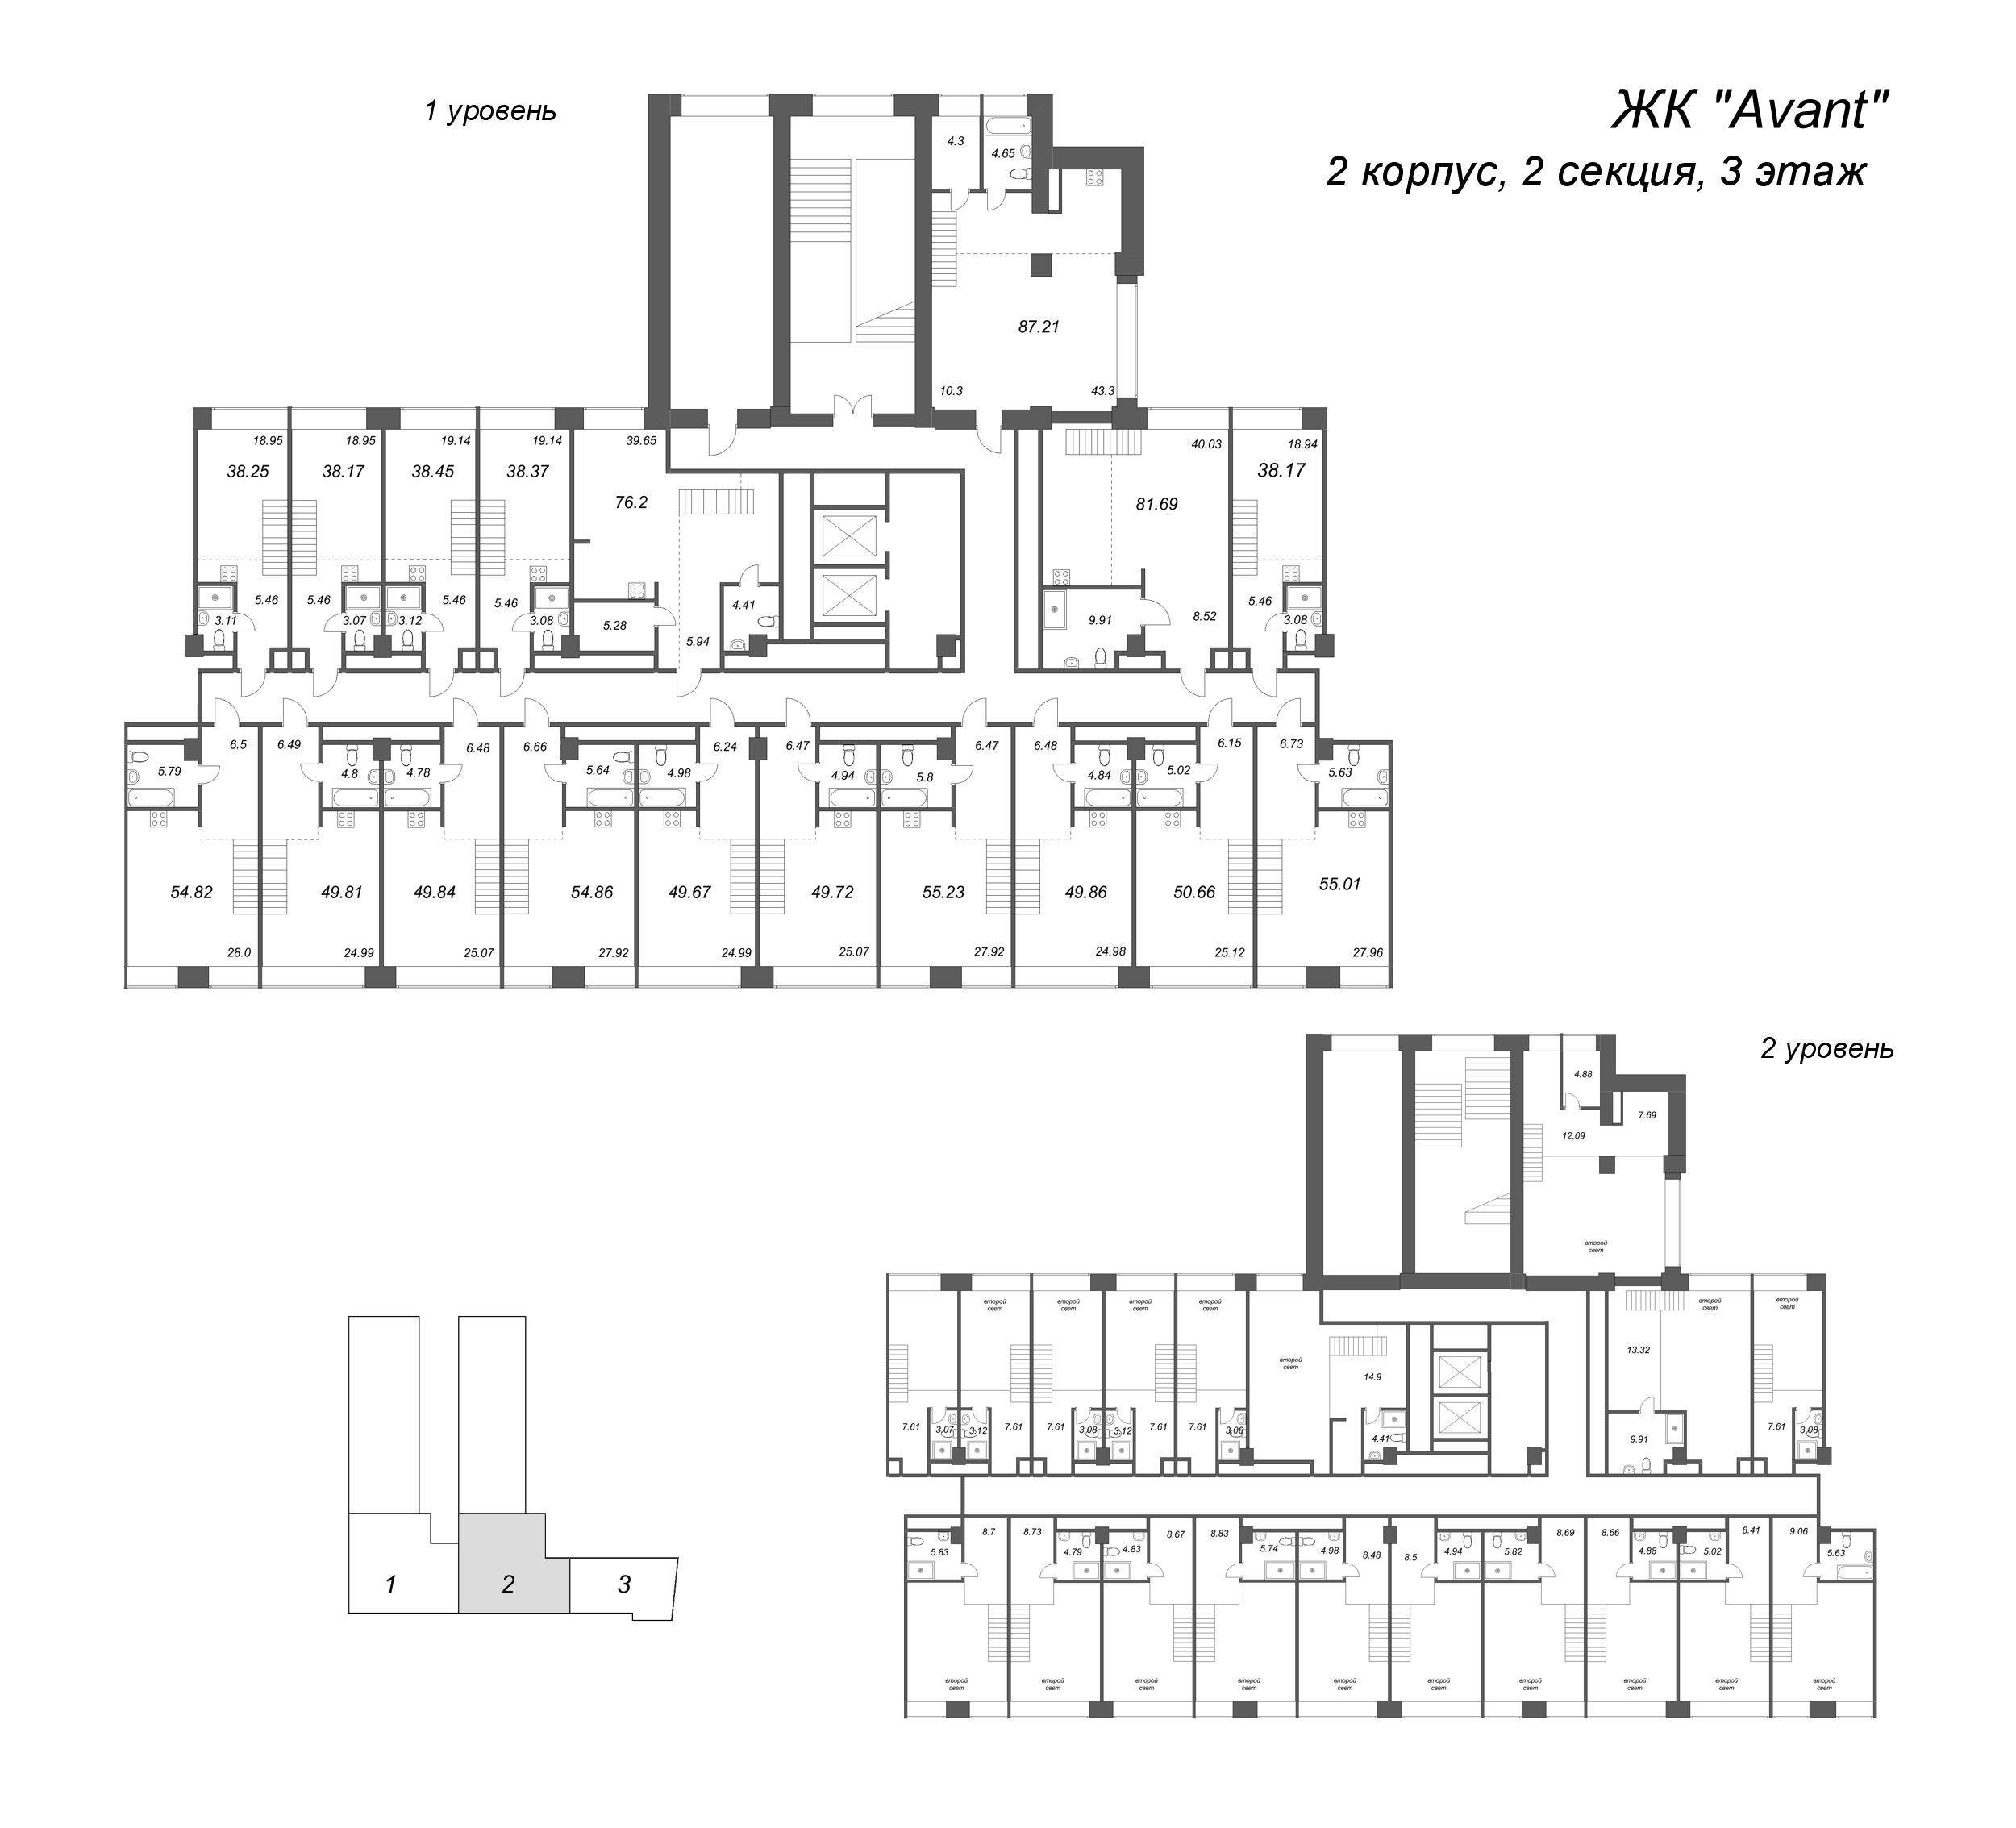 2-комнатная (Евро) квартира, 38.37 м² в ЖК "Avant" - планировка этажа